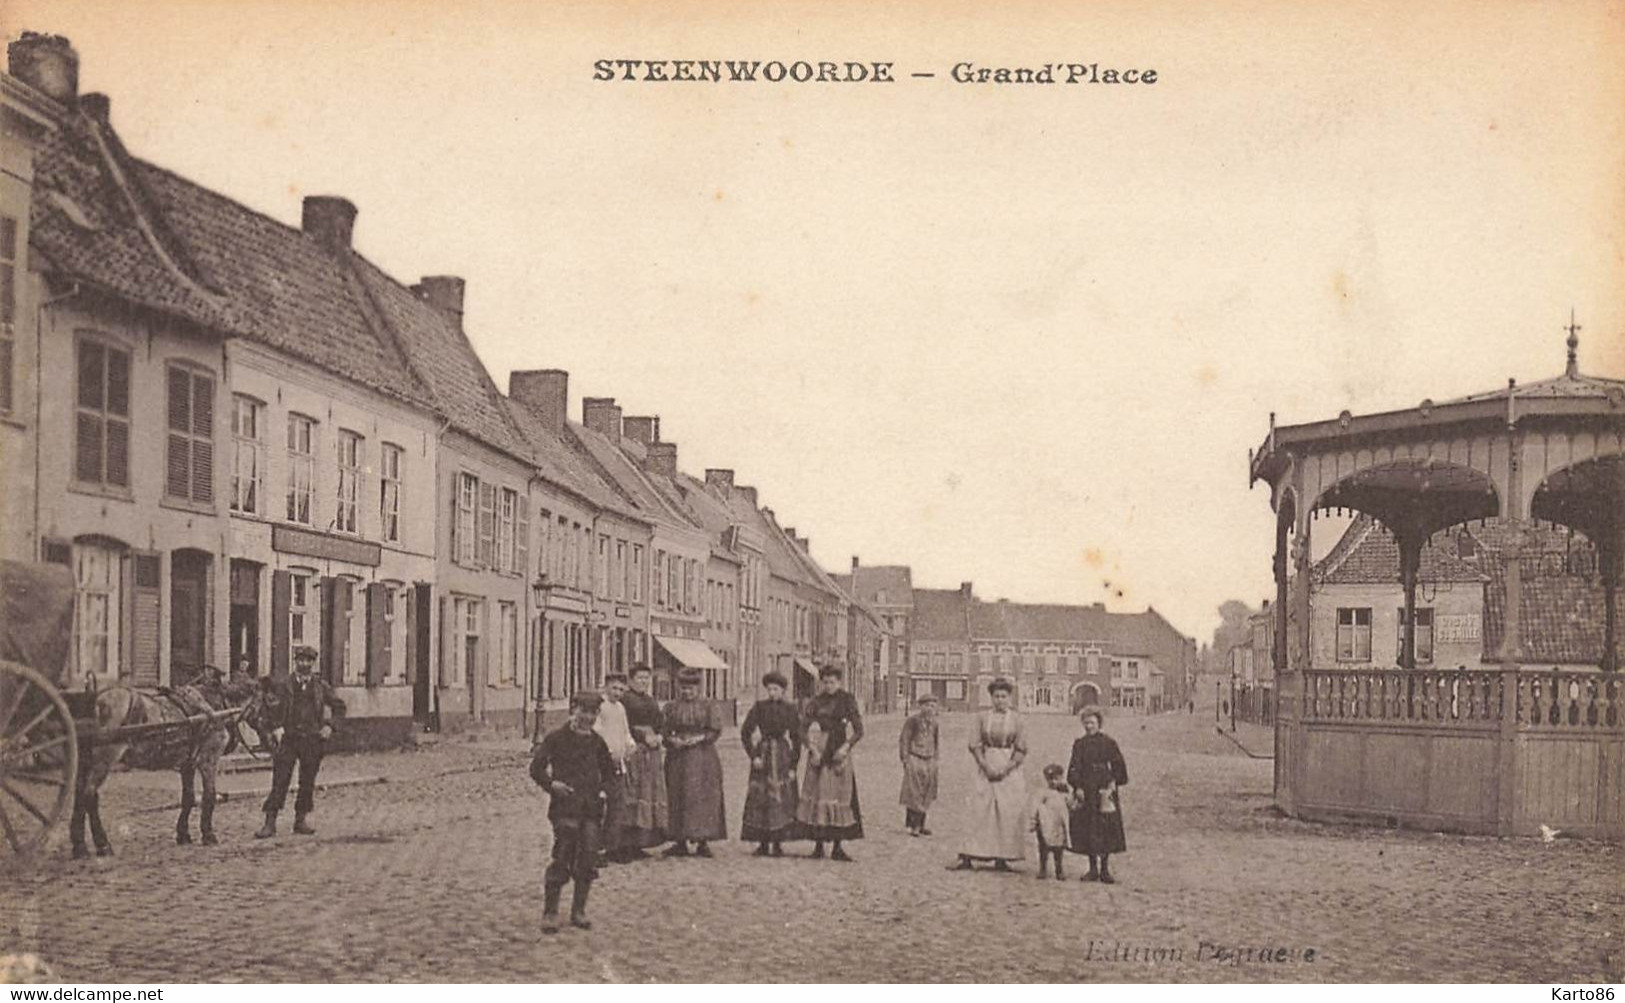 Steenwoorde * Grand'place * Kiosque à Musique * Villageois - Steenvoorde